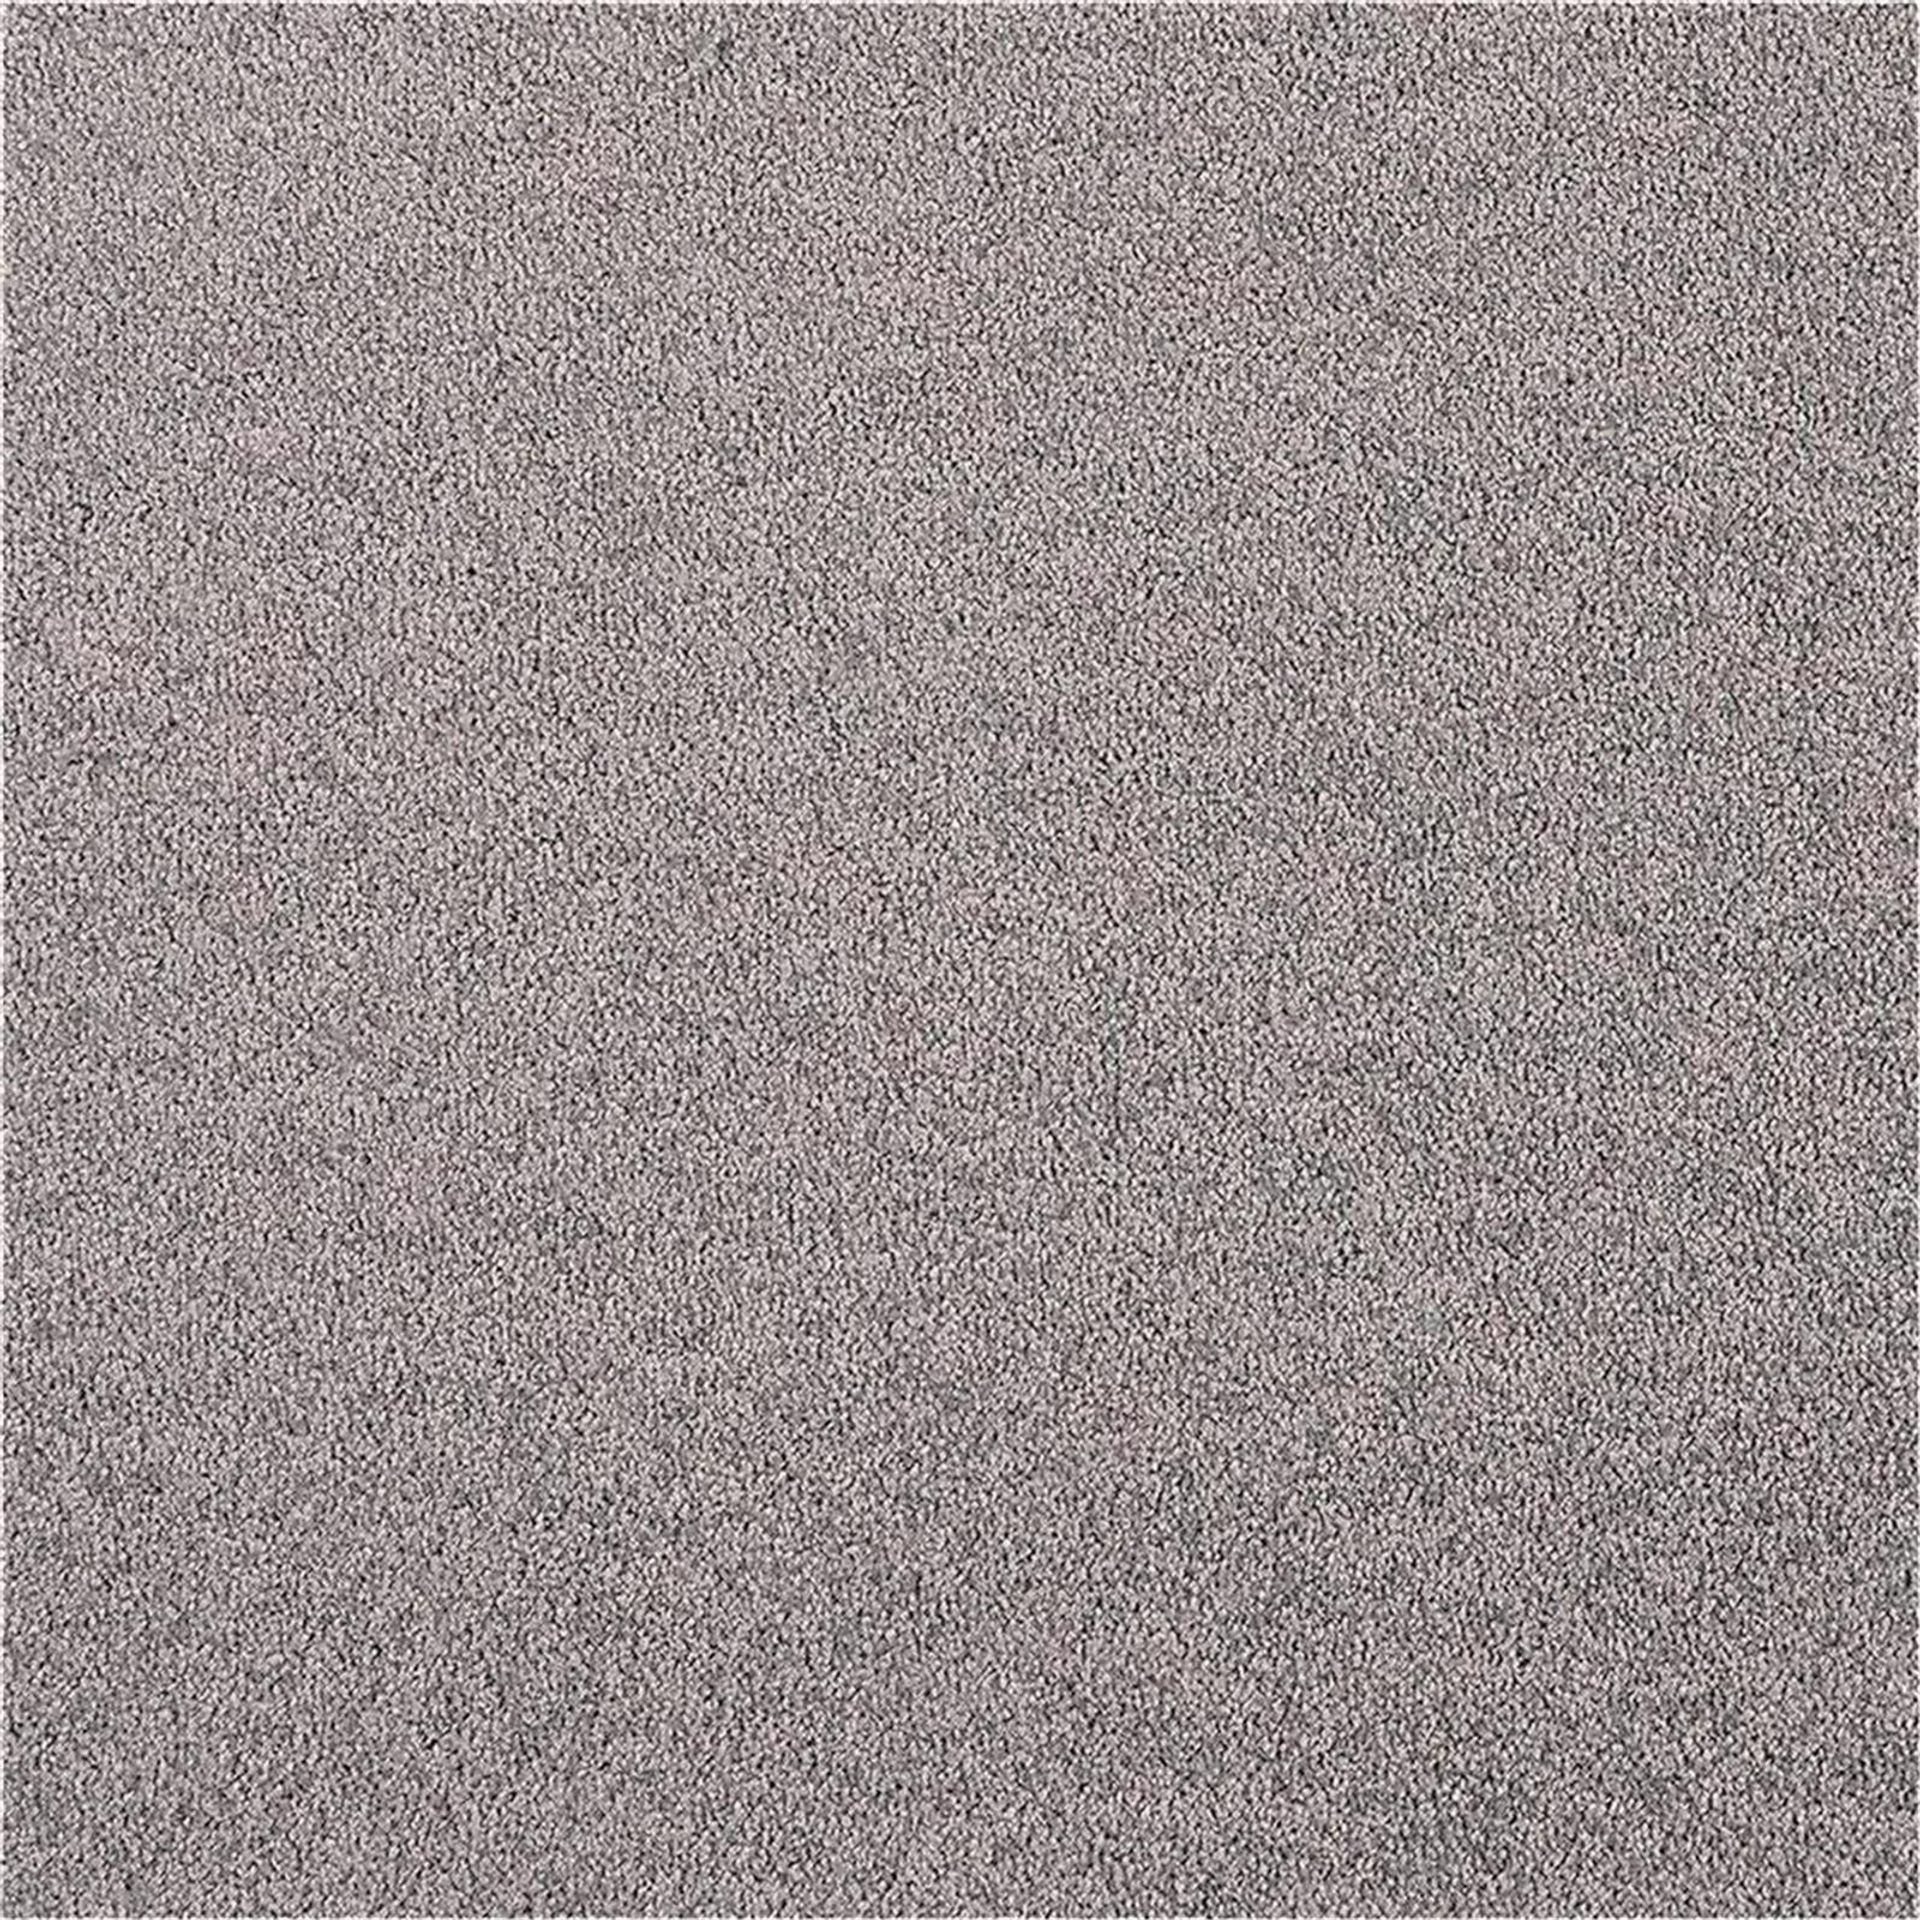 Teppichboden Infloor-Girloon Cashmere-Flair Frisé Grau 540 uni - Rollenbreite 400 cm